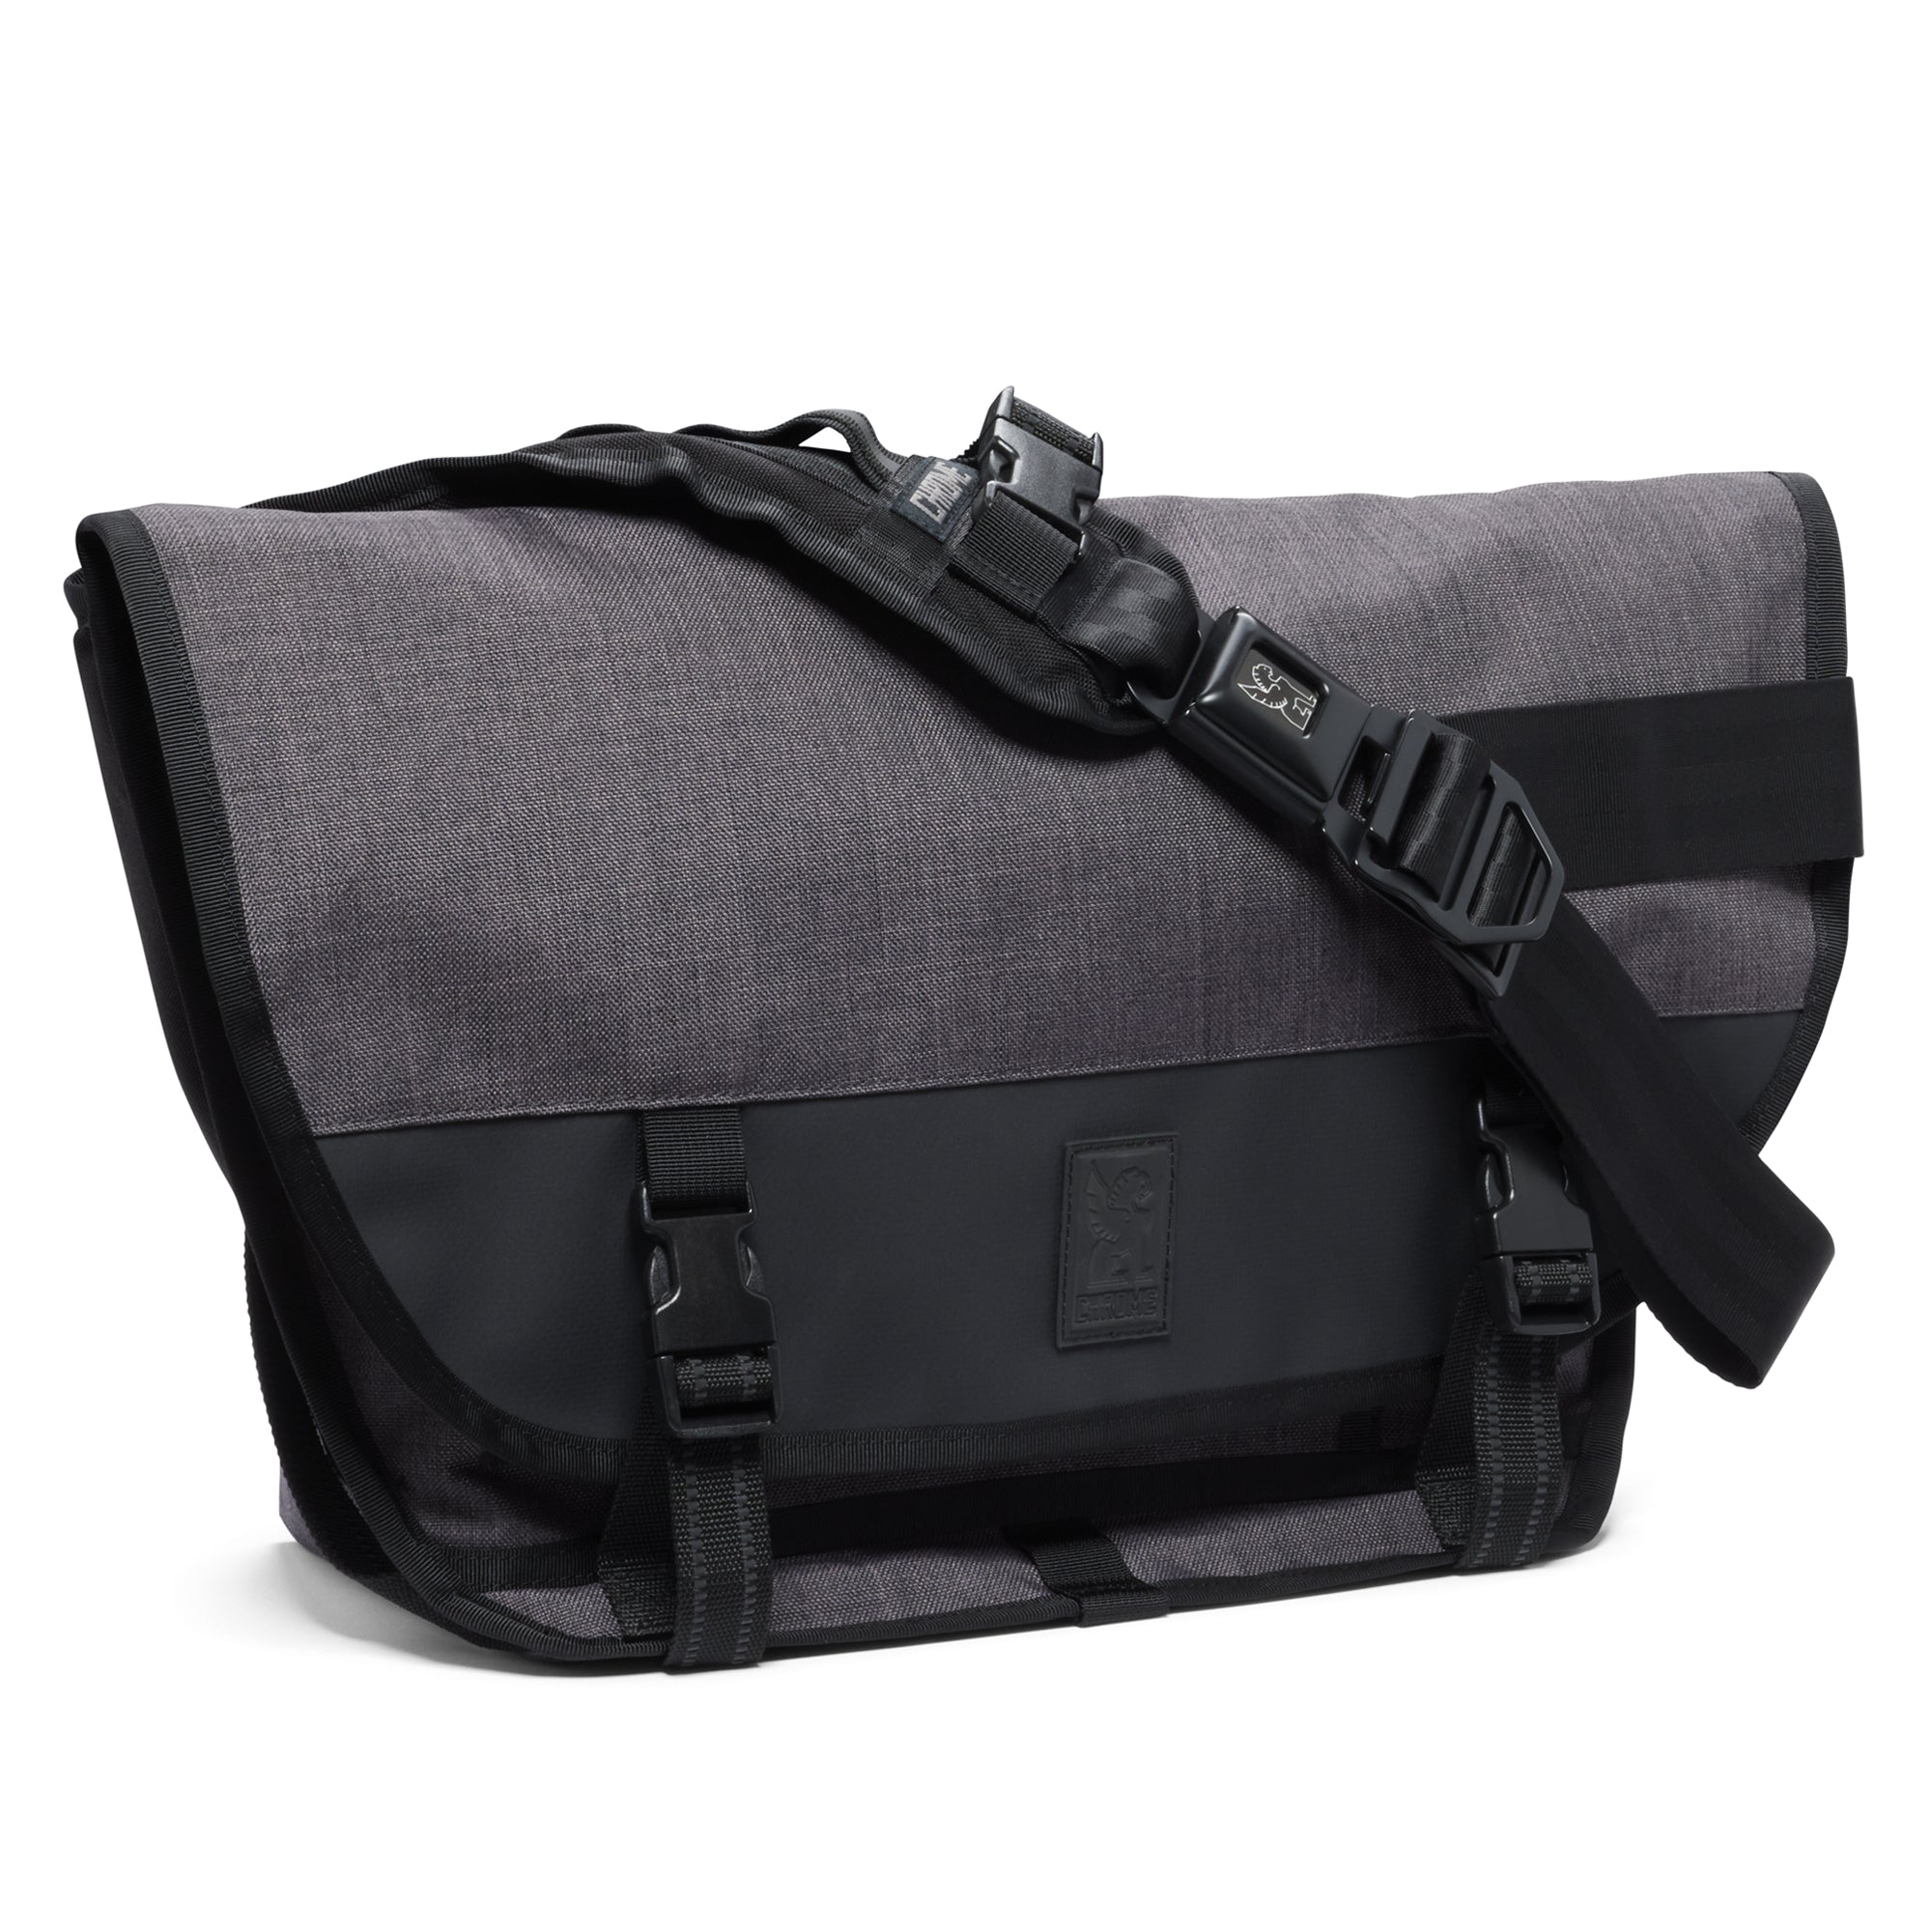 Bag Week: The Vega & Corsair from Chrome Bags